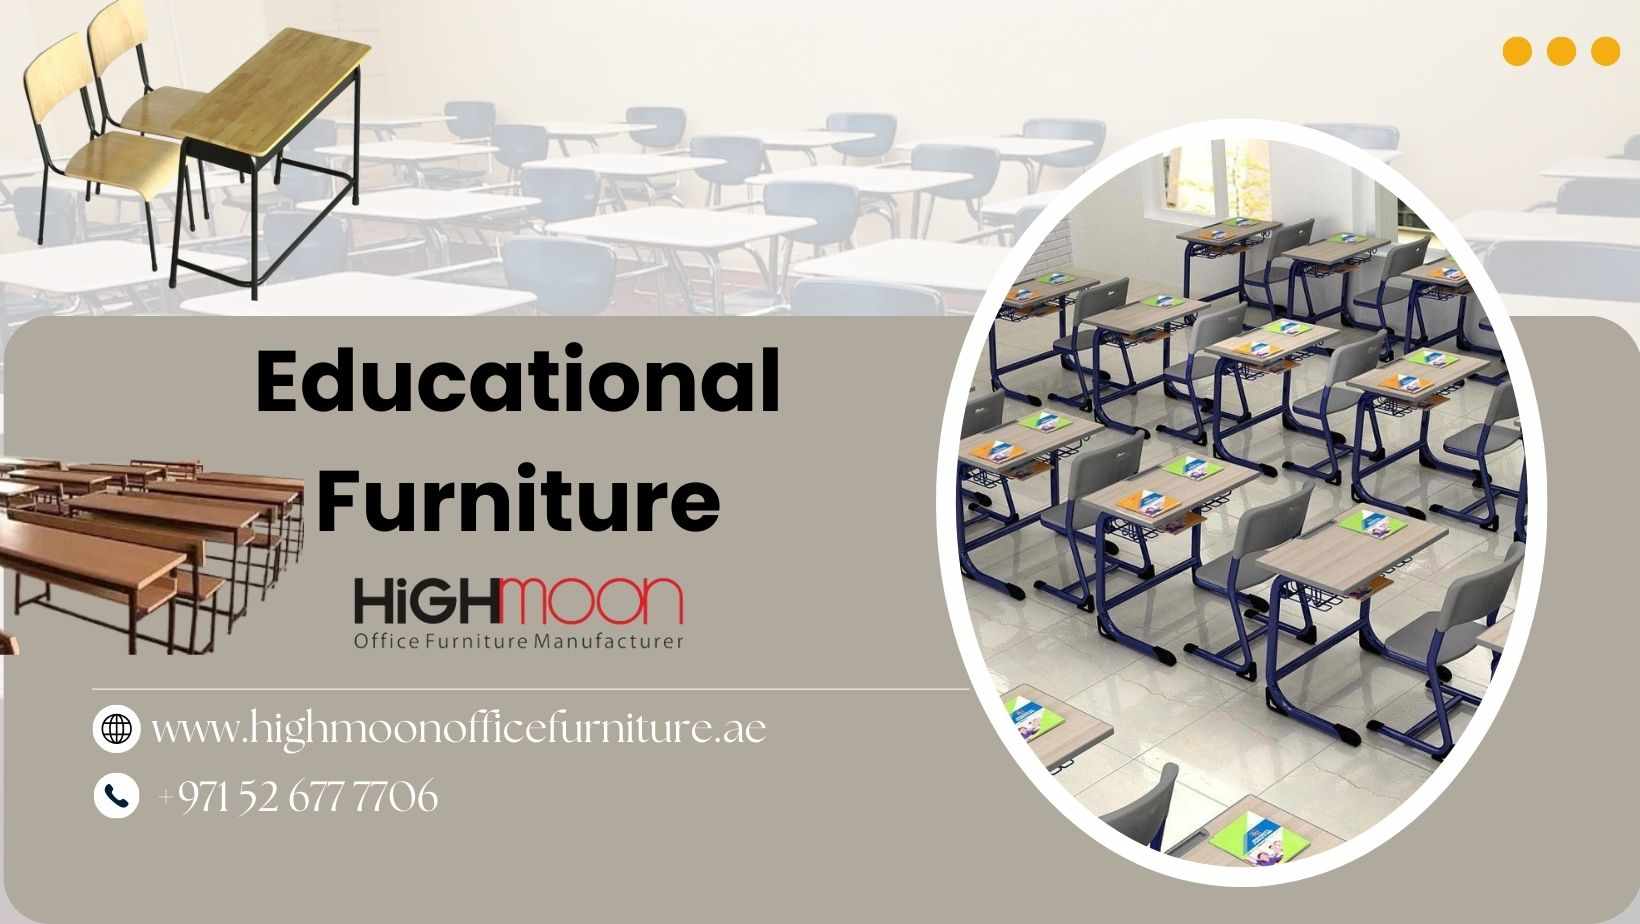 Educational Furniture in South Africa Buy School Furniture